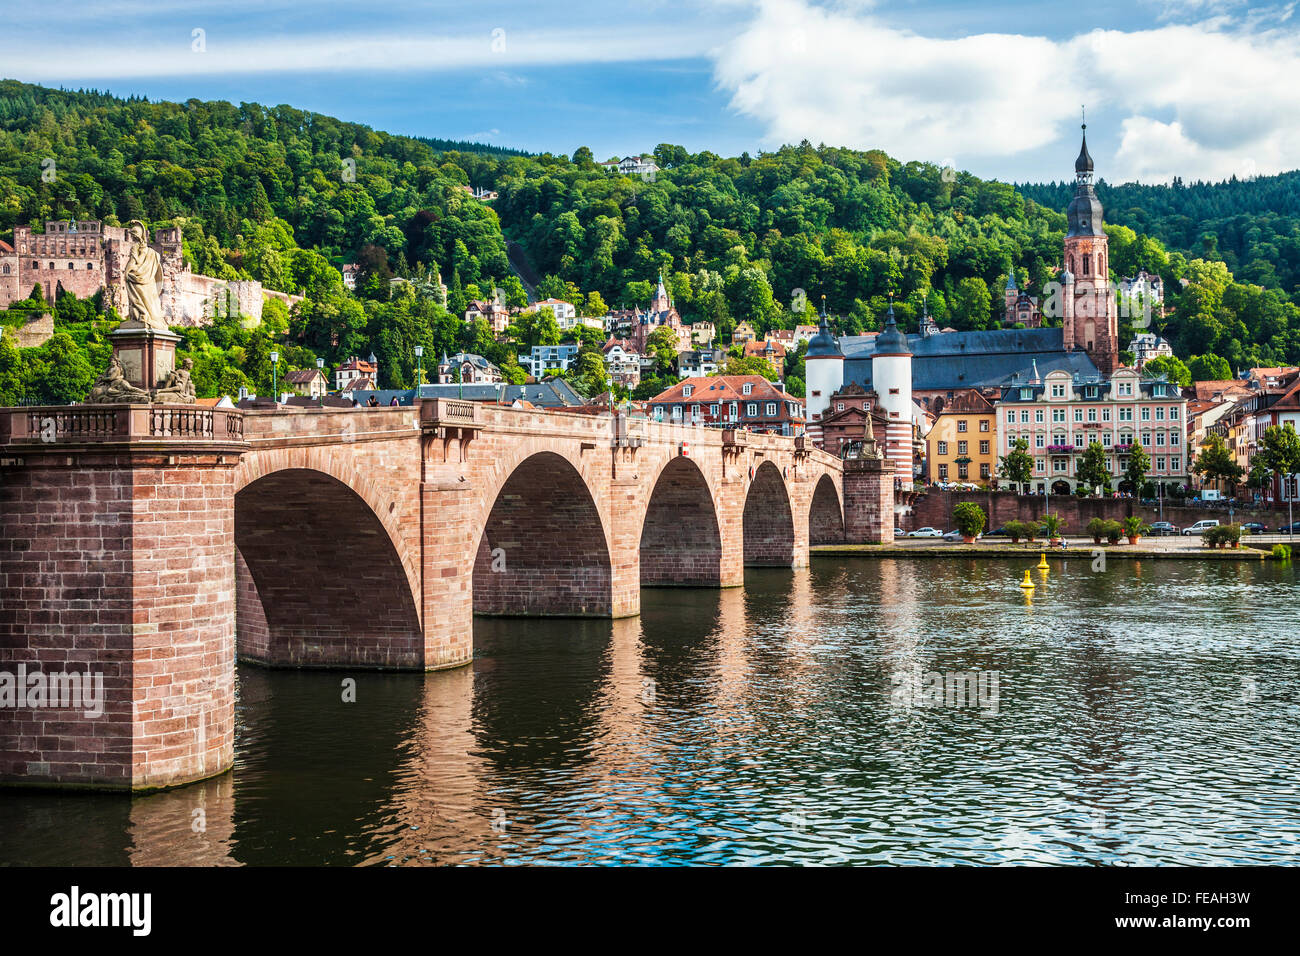 The Alte Brucke, old bridge or Karl Theodor Bridge and Heiliggeistkirche in Heidelberg. Stock Photo